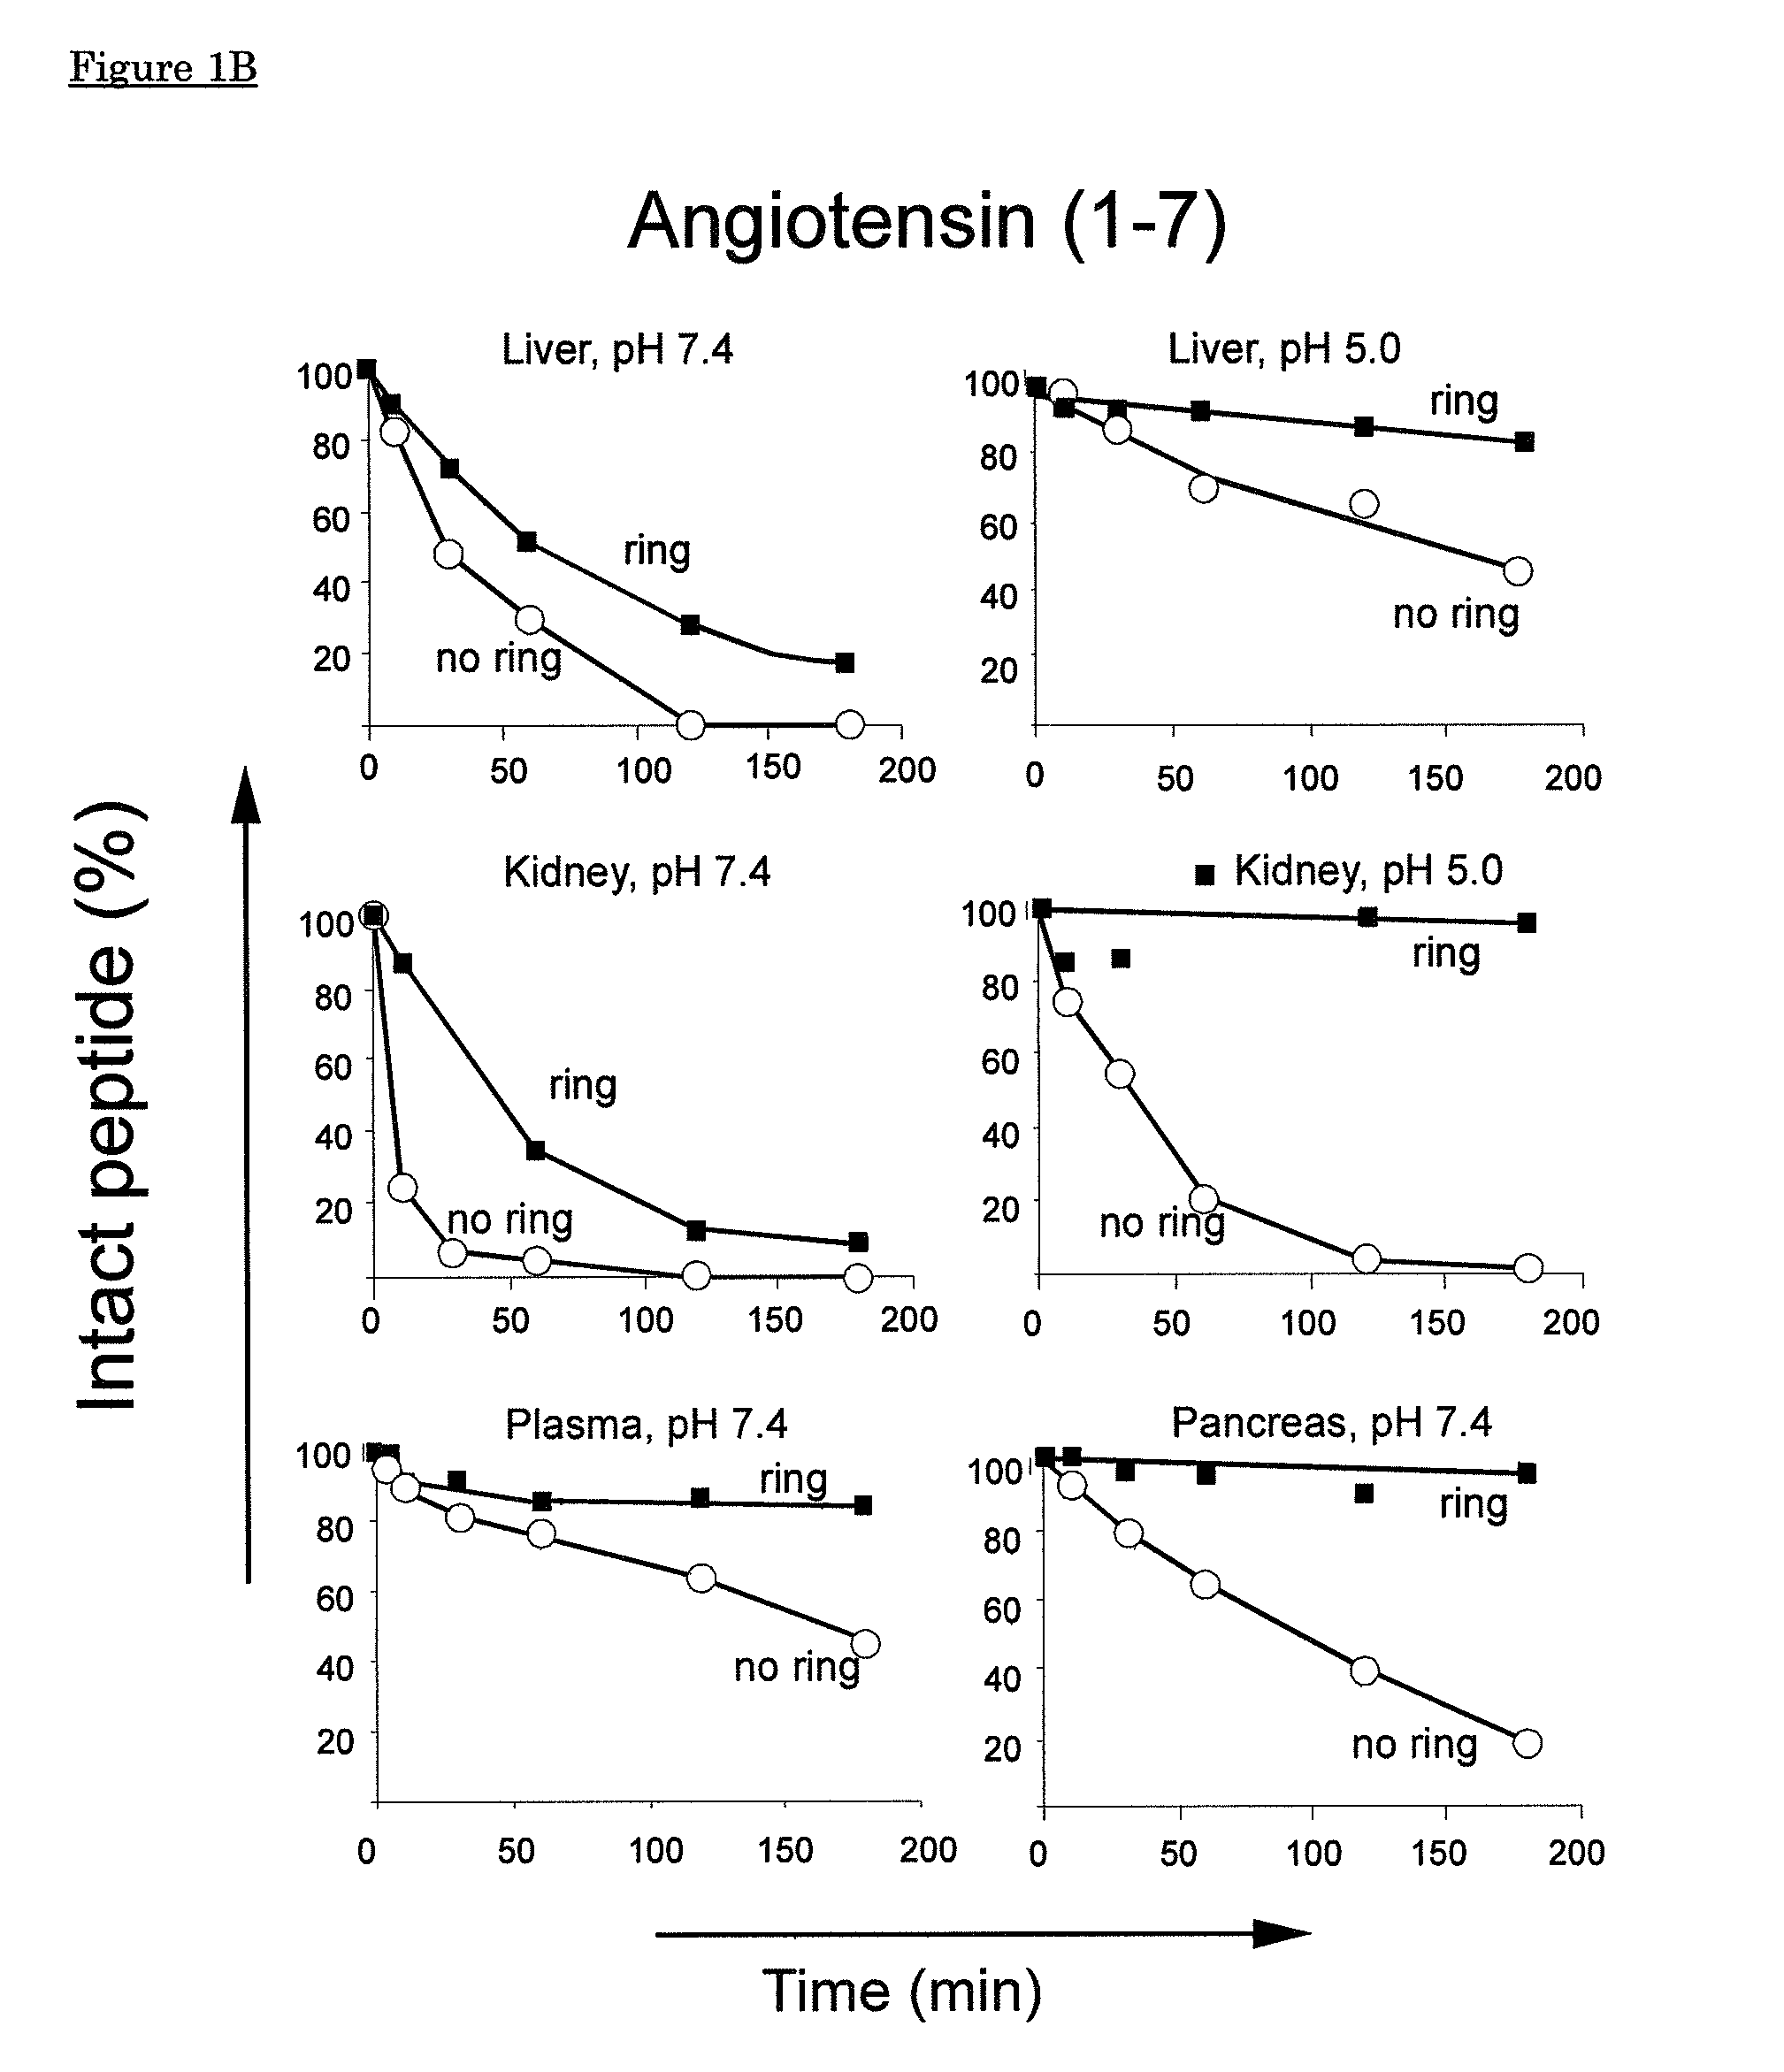 Cyclic angiotensin analogs